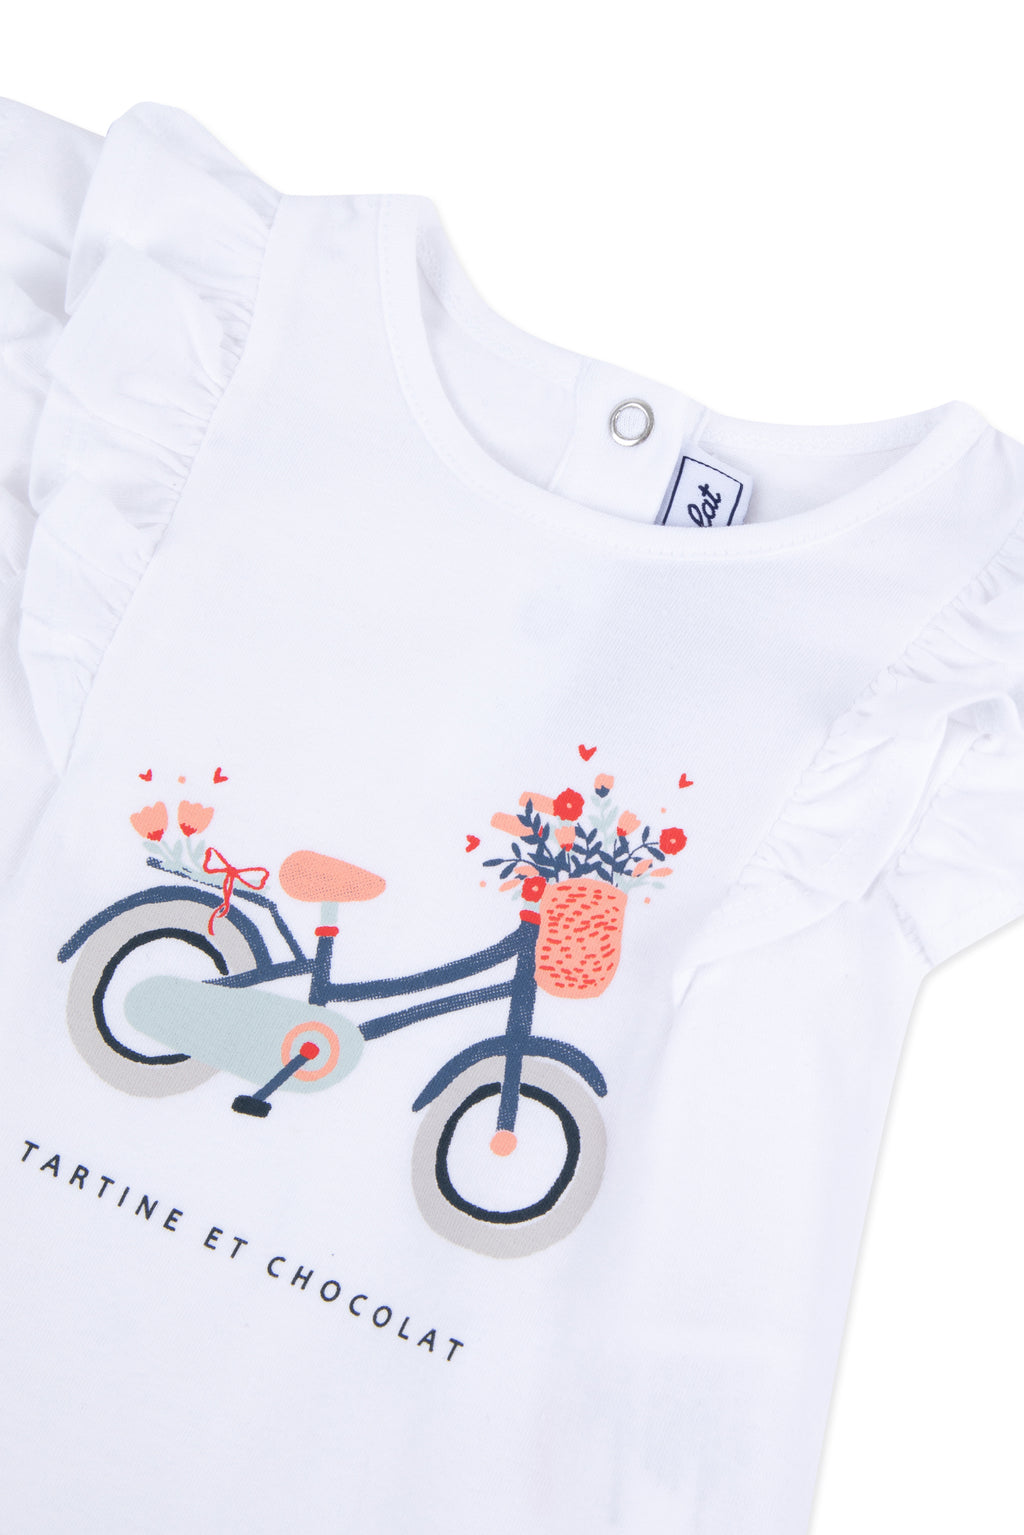 T-shirt - Peach Illustration bike